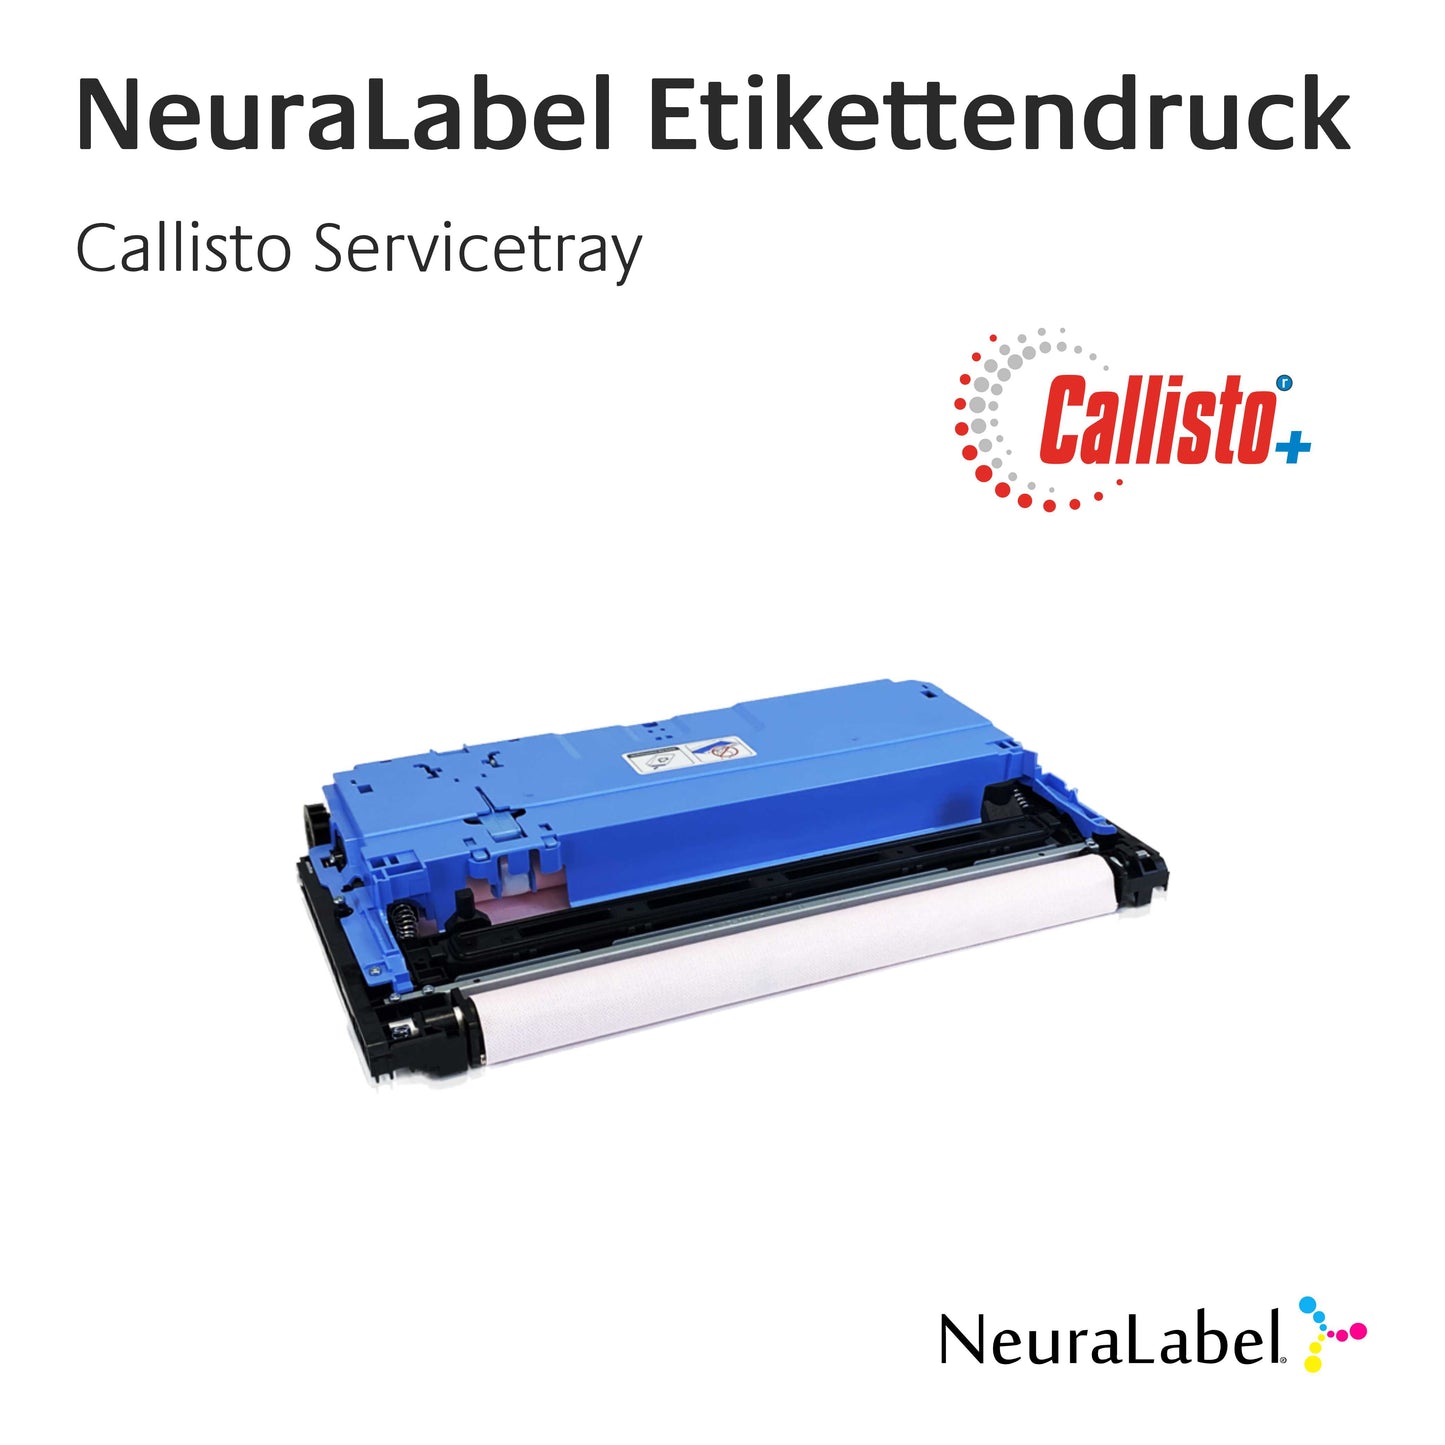 Service-Tray für Callisto Farbetikettendrucker